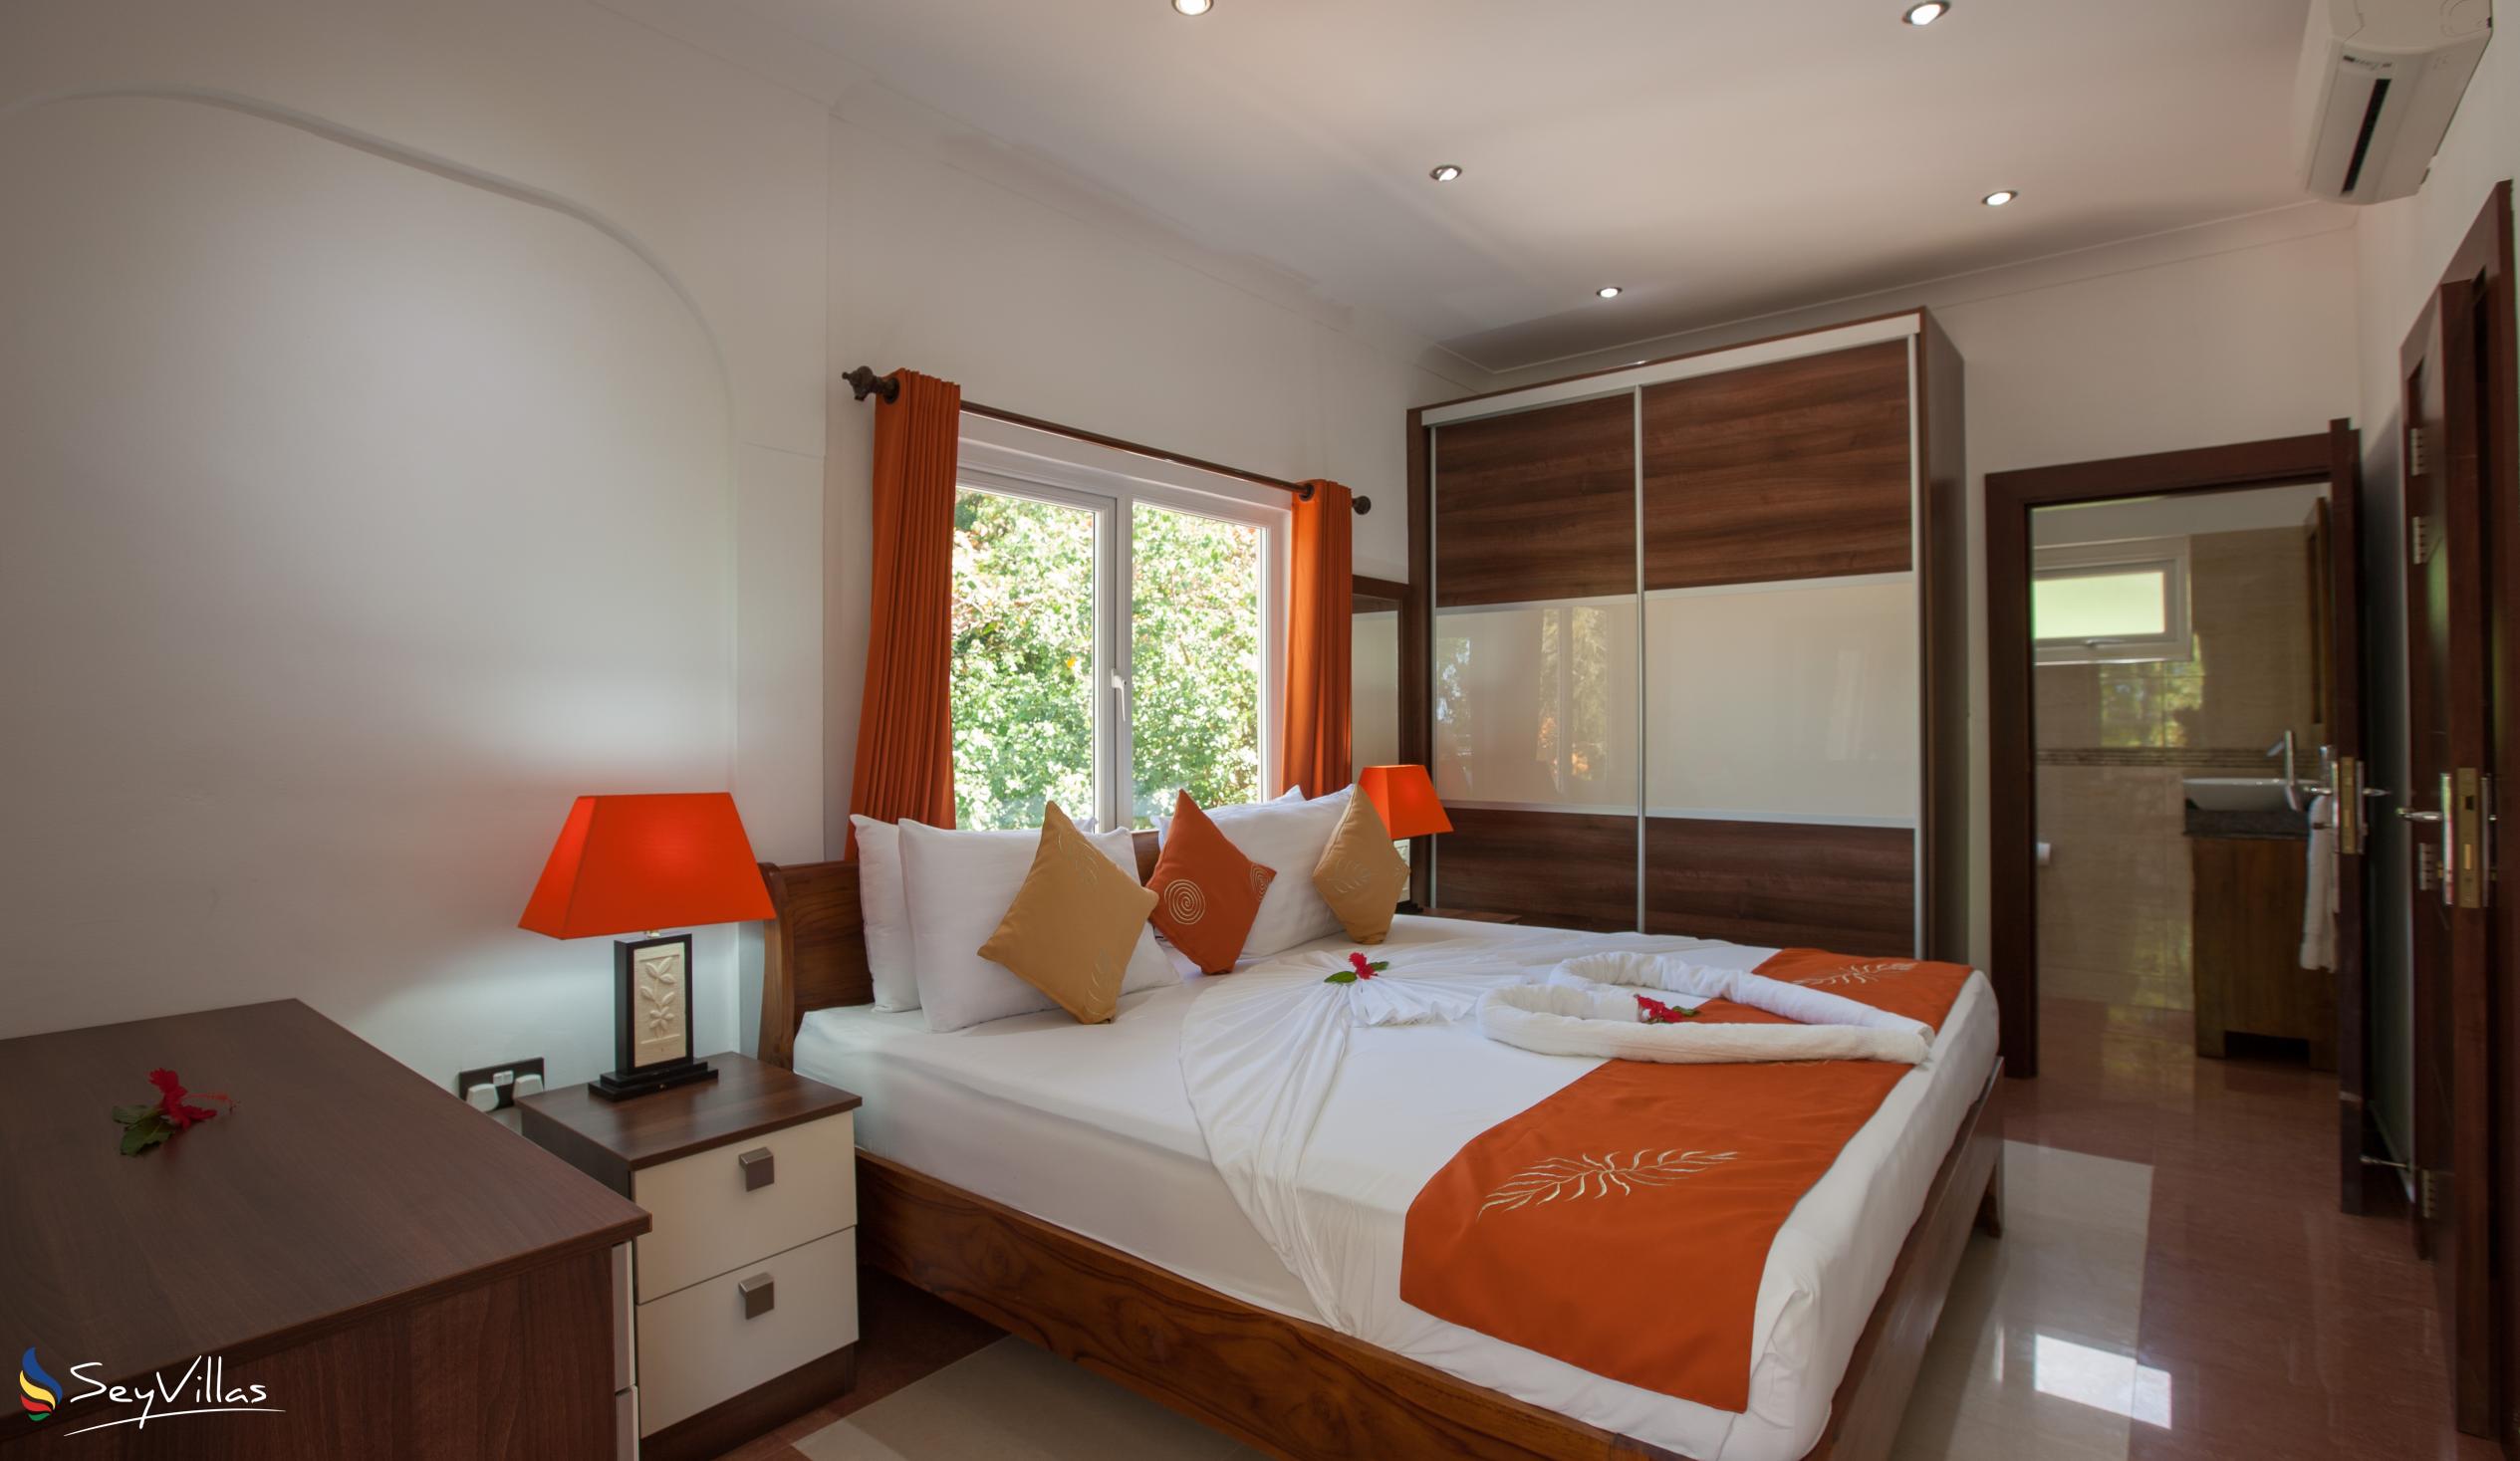 Photo 110: YASAD Luxury Beach Residence - 3-Bedroom Apartment First Floor - Praslin (Seychelles)